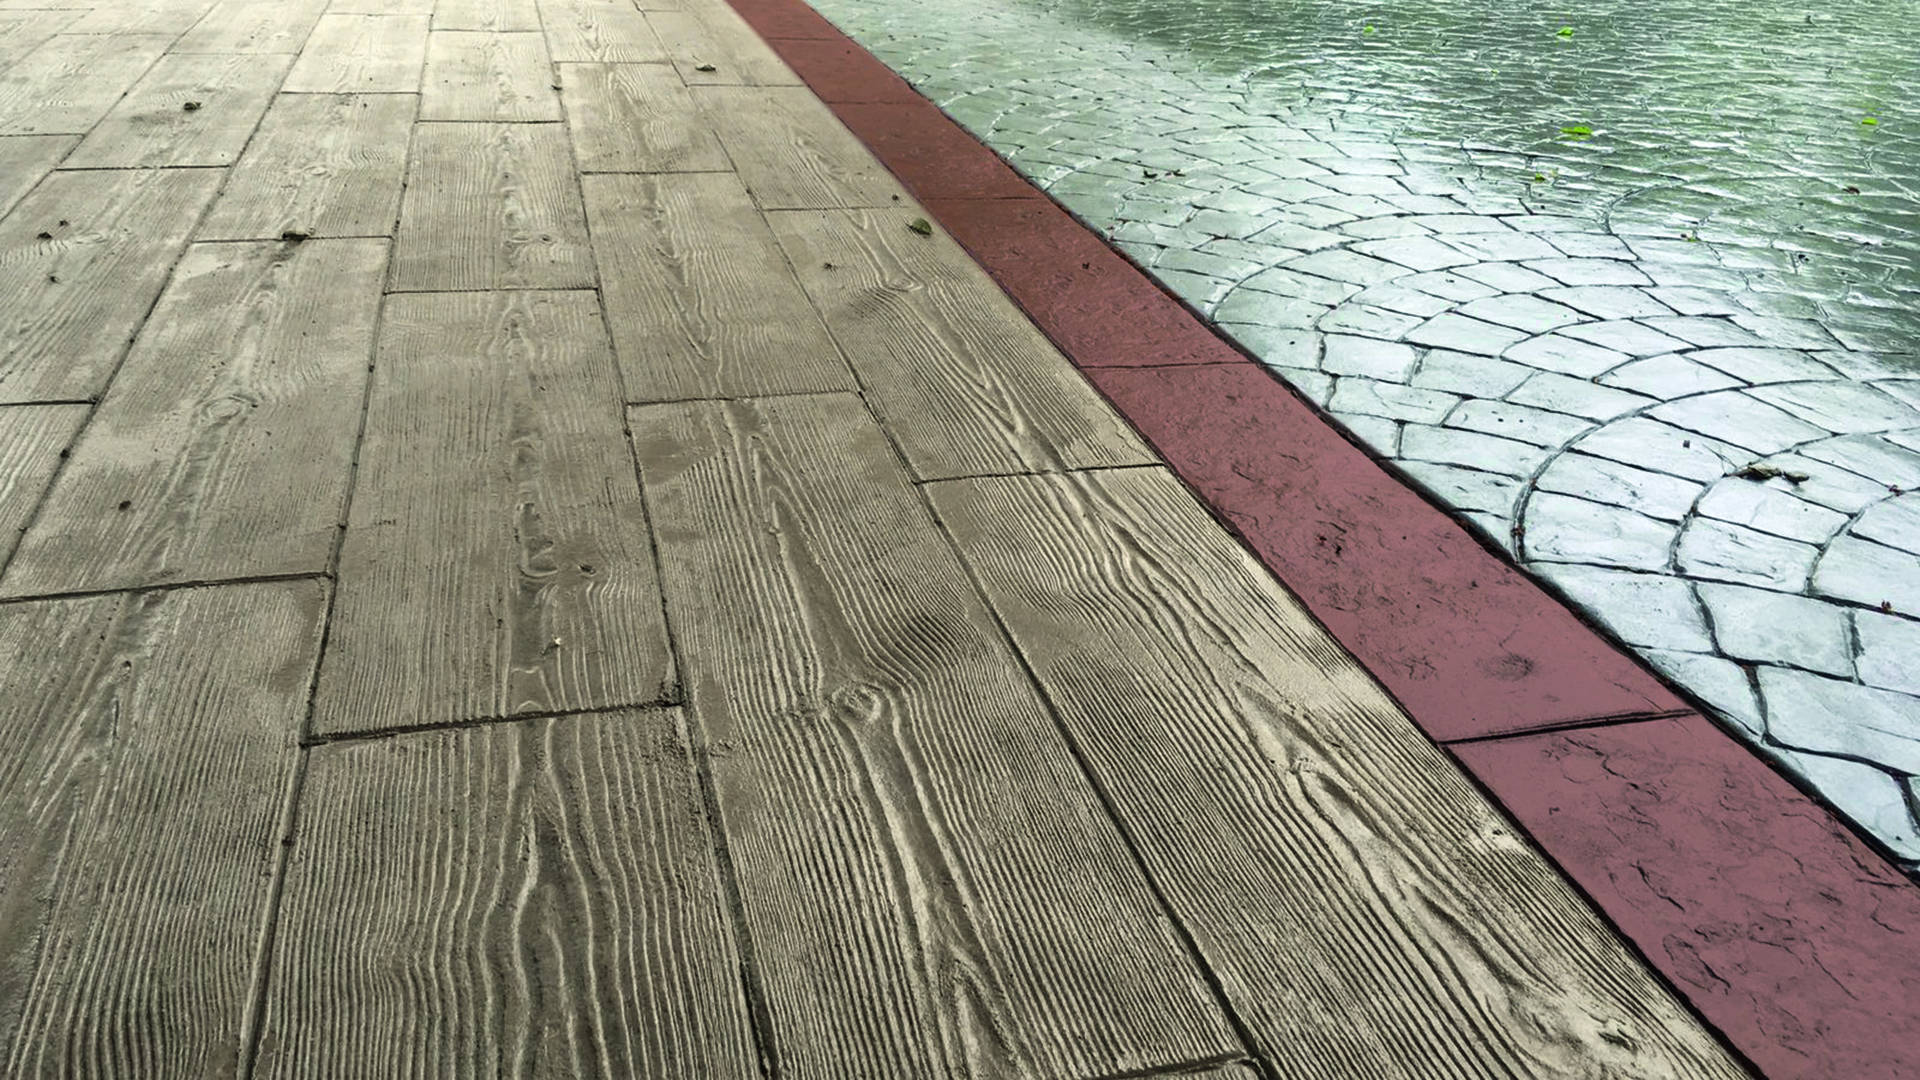 urbanization with imitation wood imprinted concrete floor